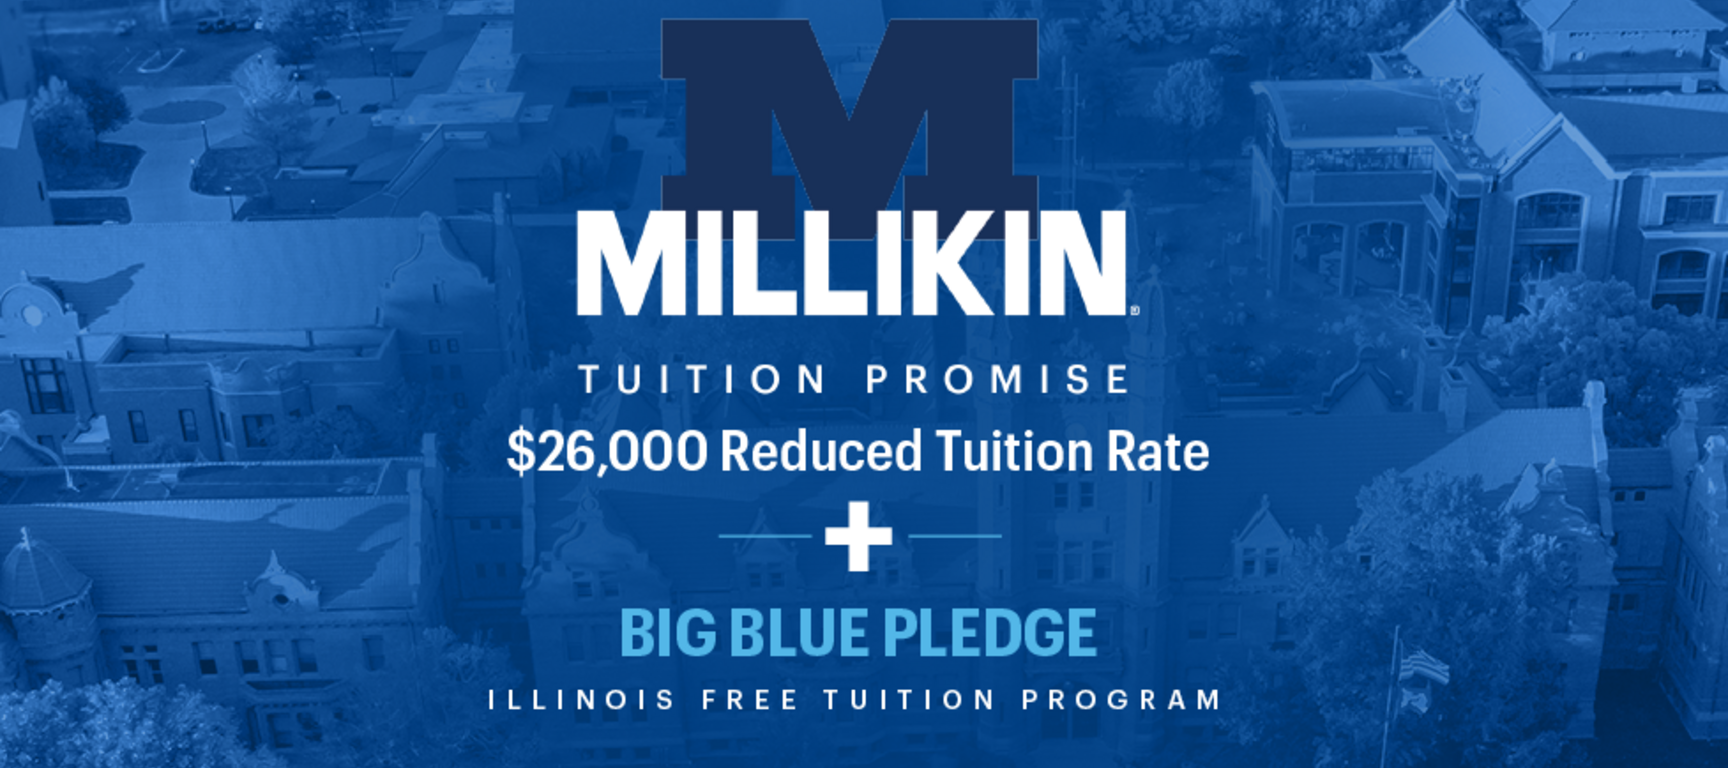 Millikin Tuition Promise and Big Blue Pledge Header Image V2